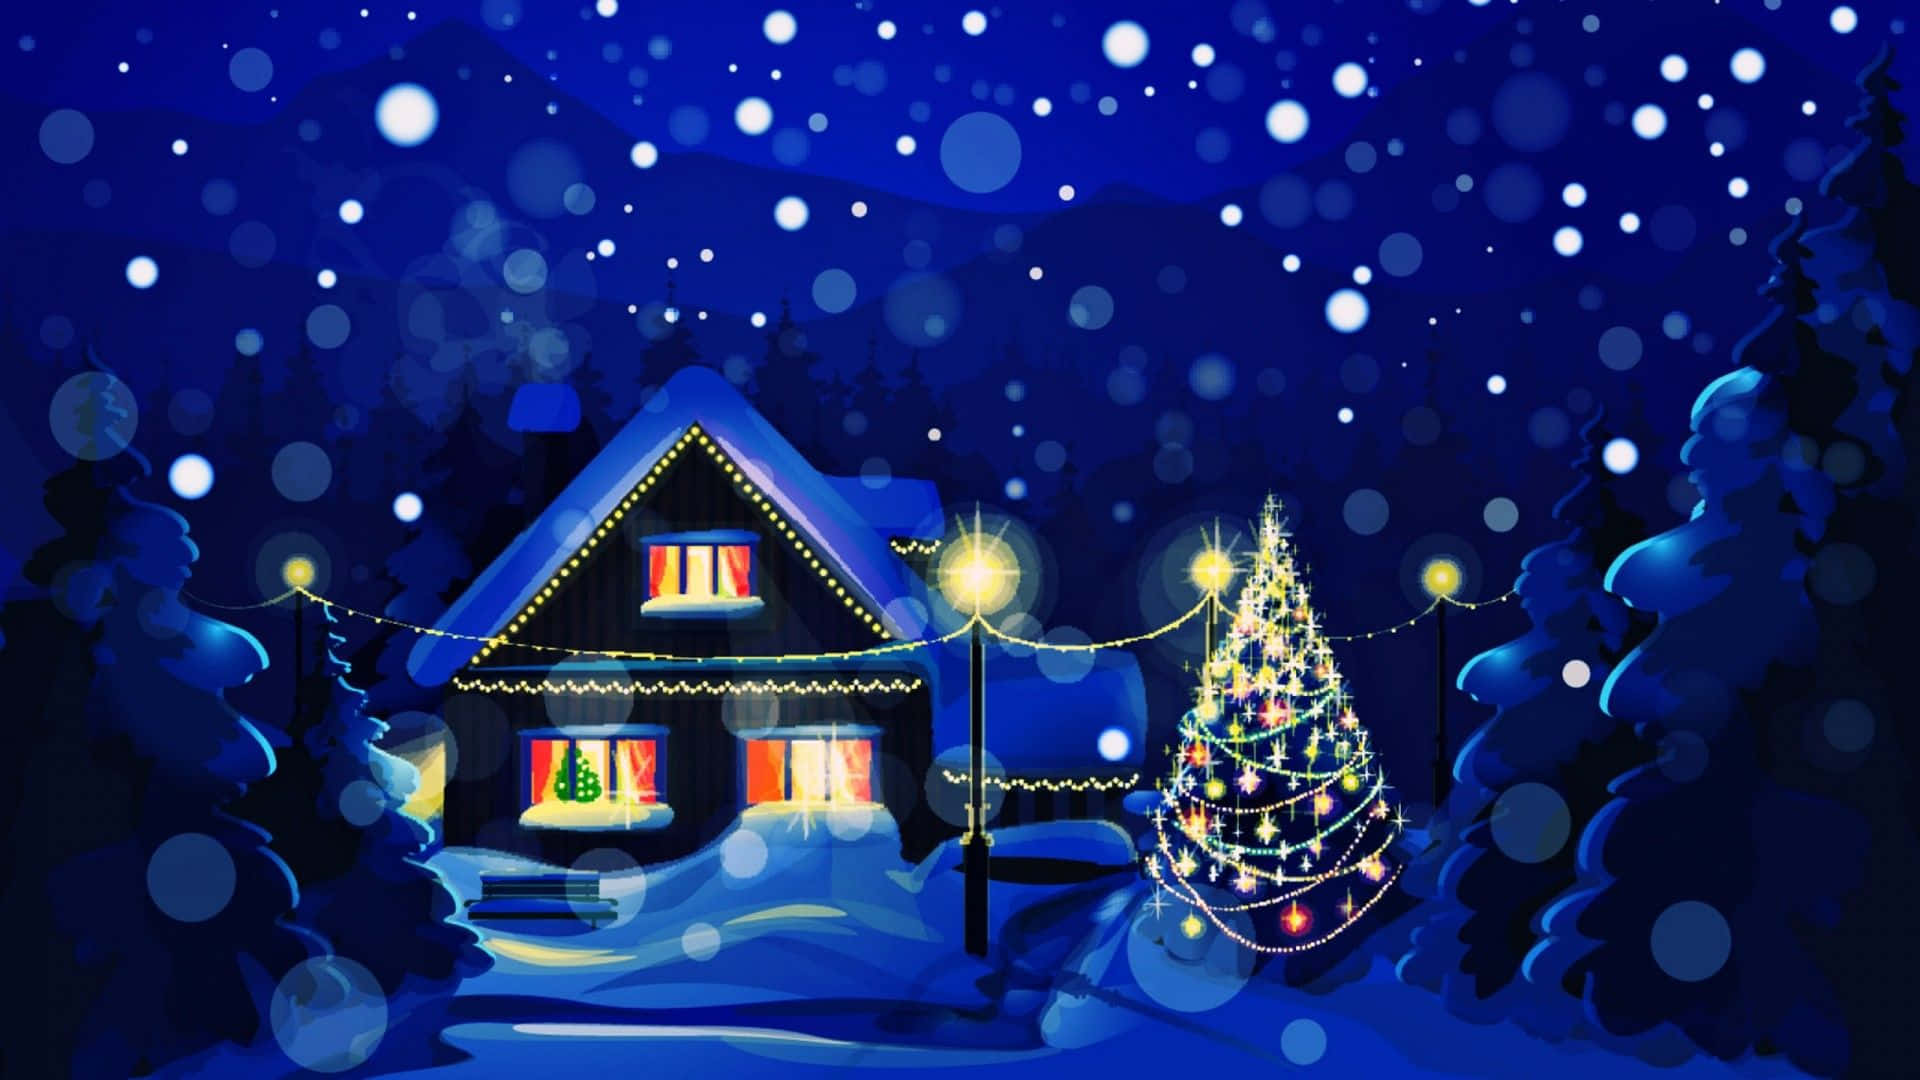 Celebrate the joy and nostalgia of Christmas with this festive scene.